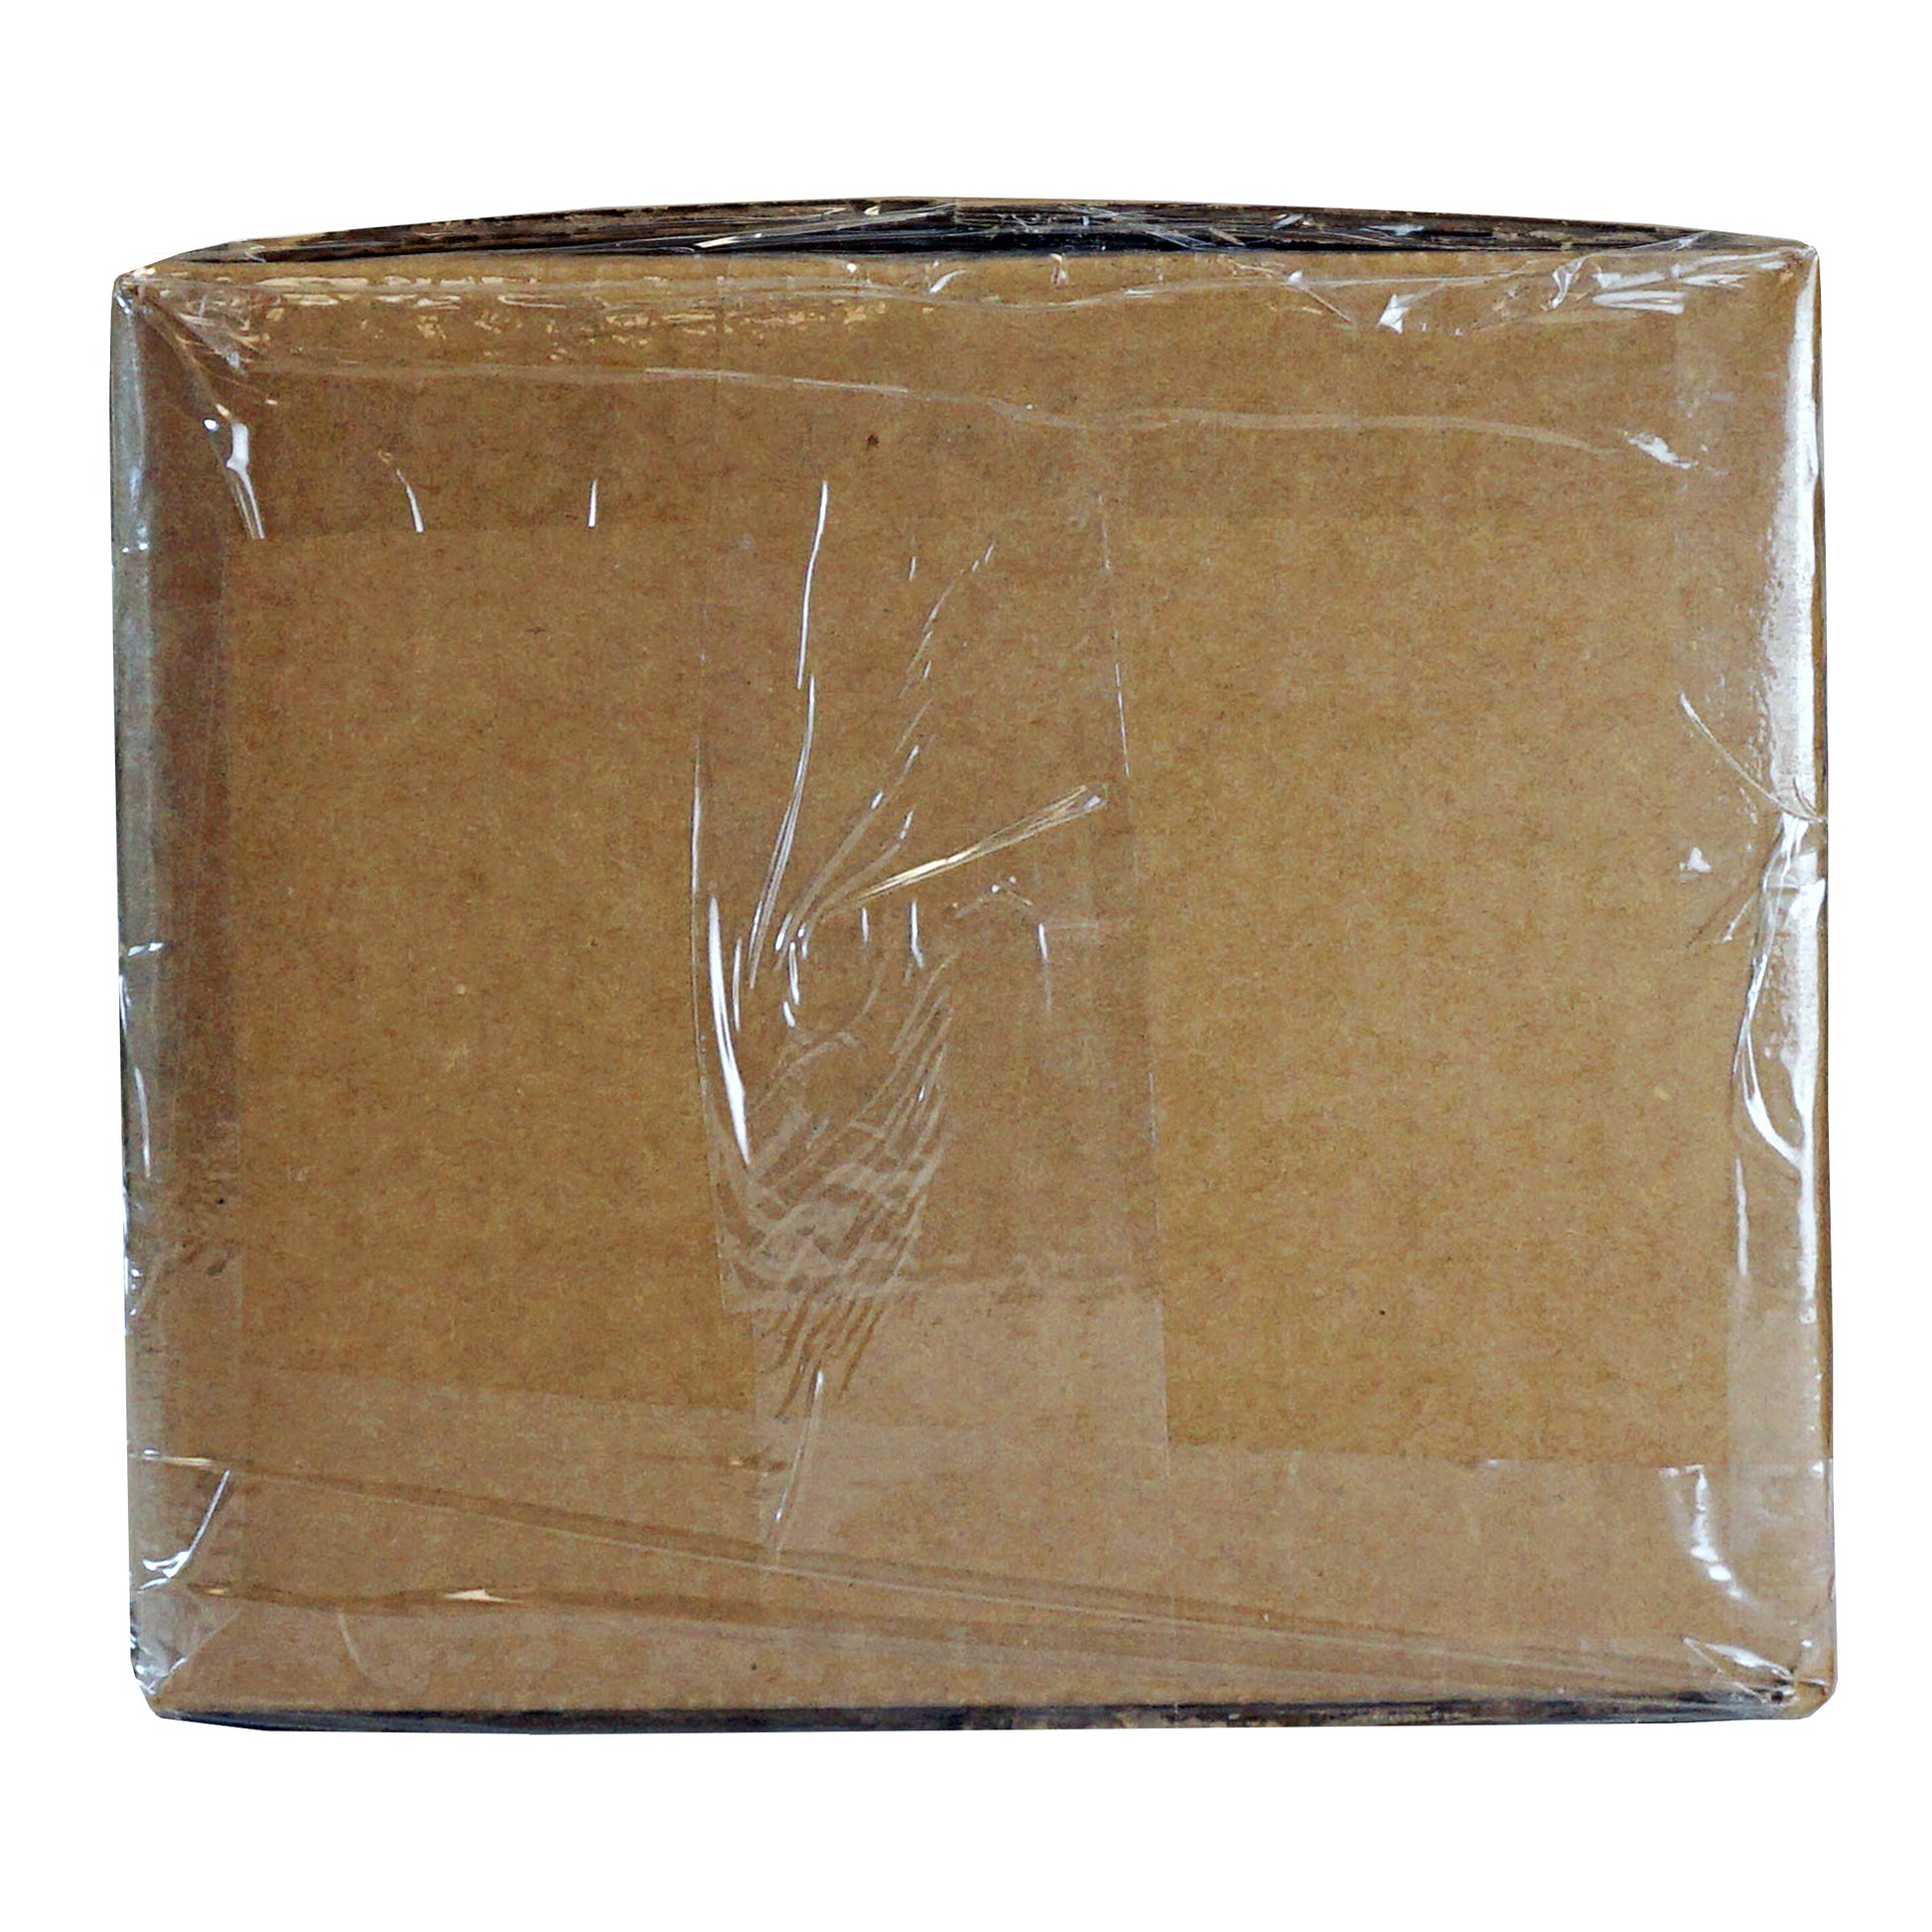 Load image into Gallery viewer, MFSM24 Magnetic Floor Sweeper - Packaging